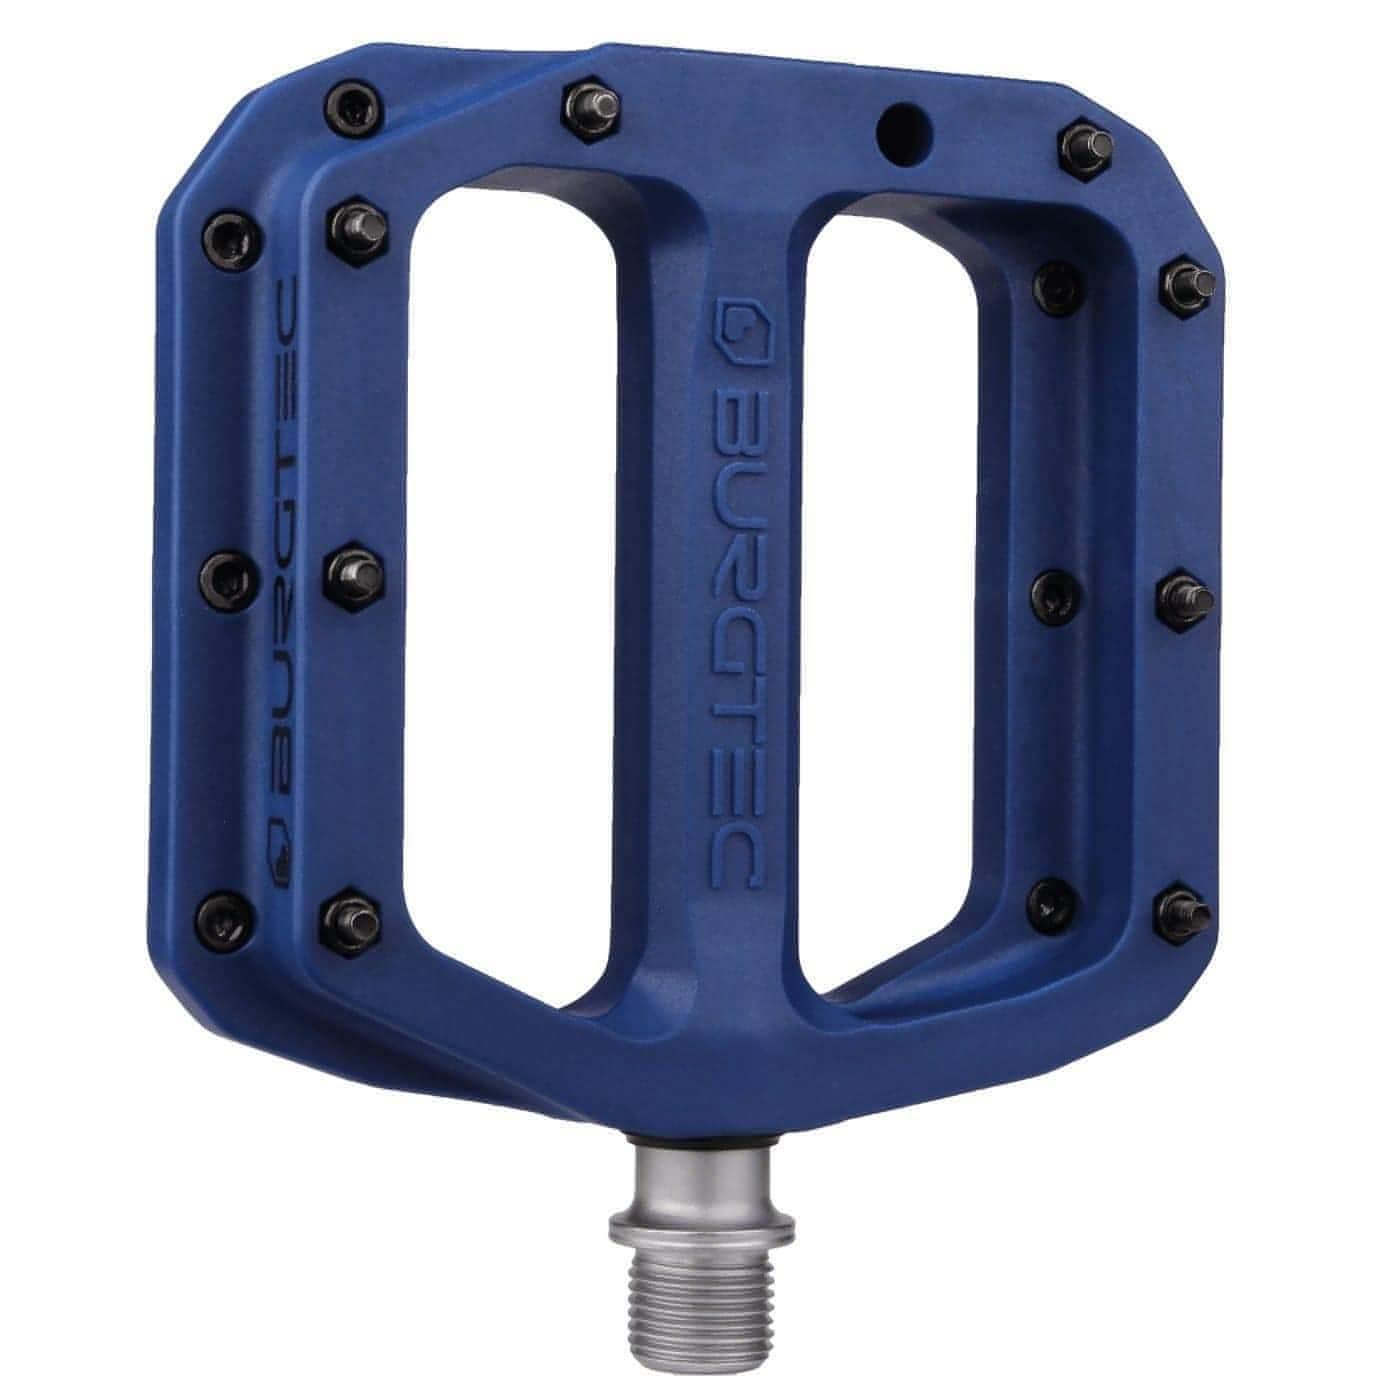 Burgtec MK4 Composite Flat Pedals - Blue 712885685981 - Start Fitness